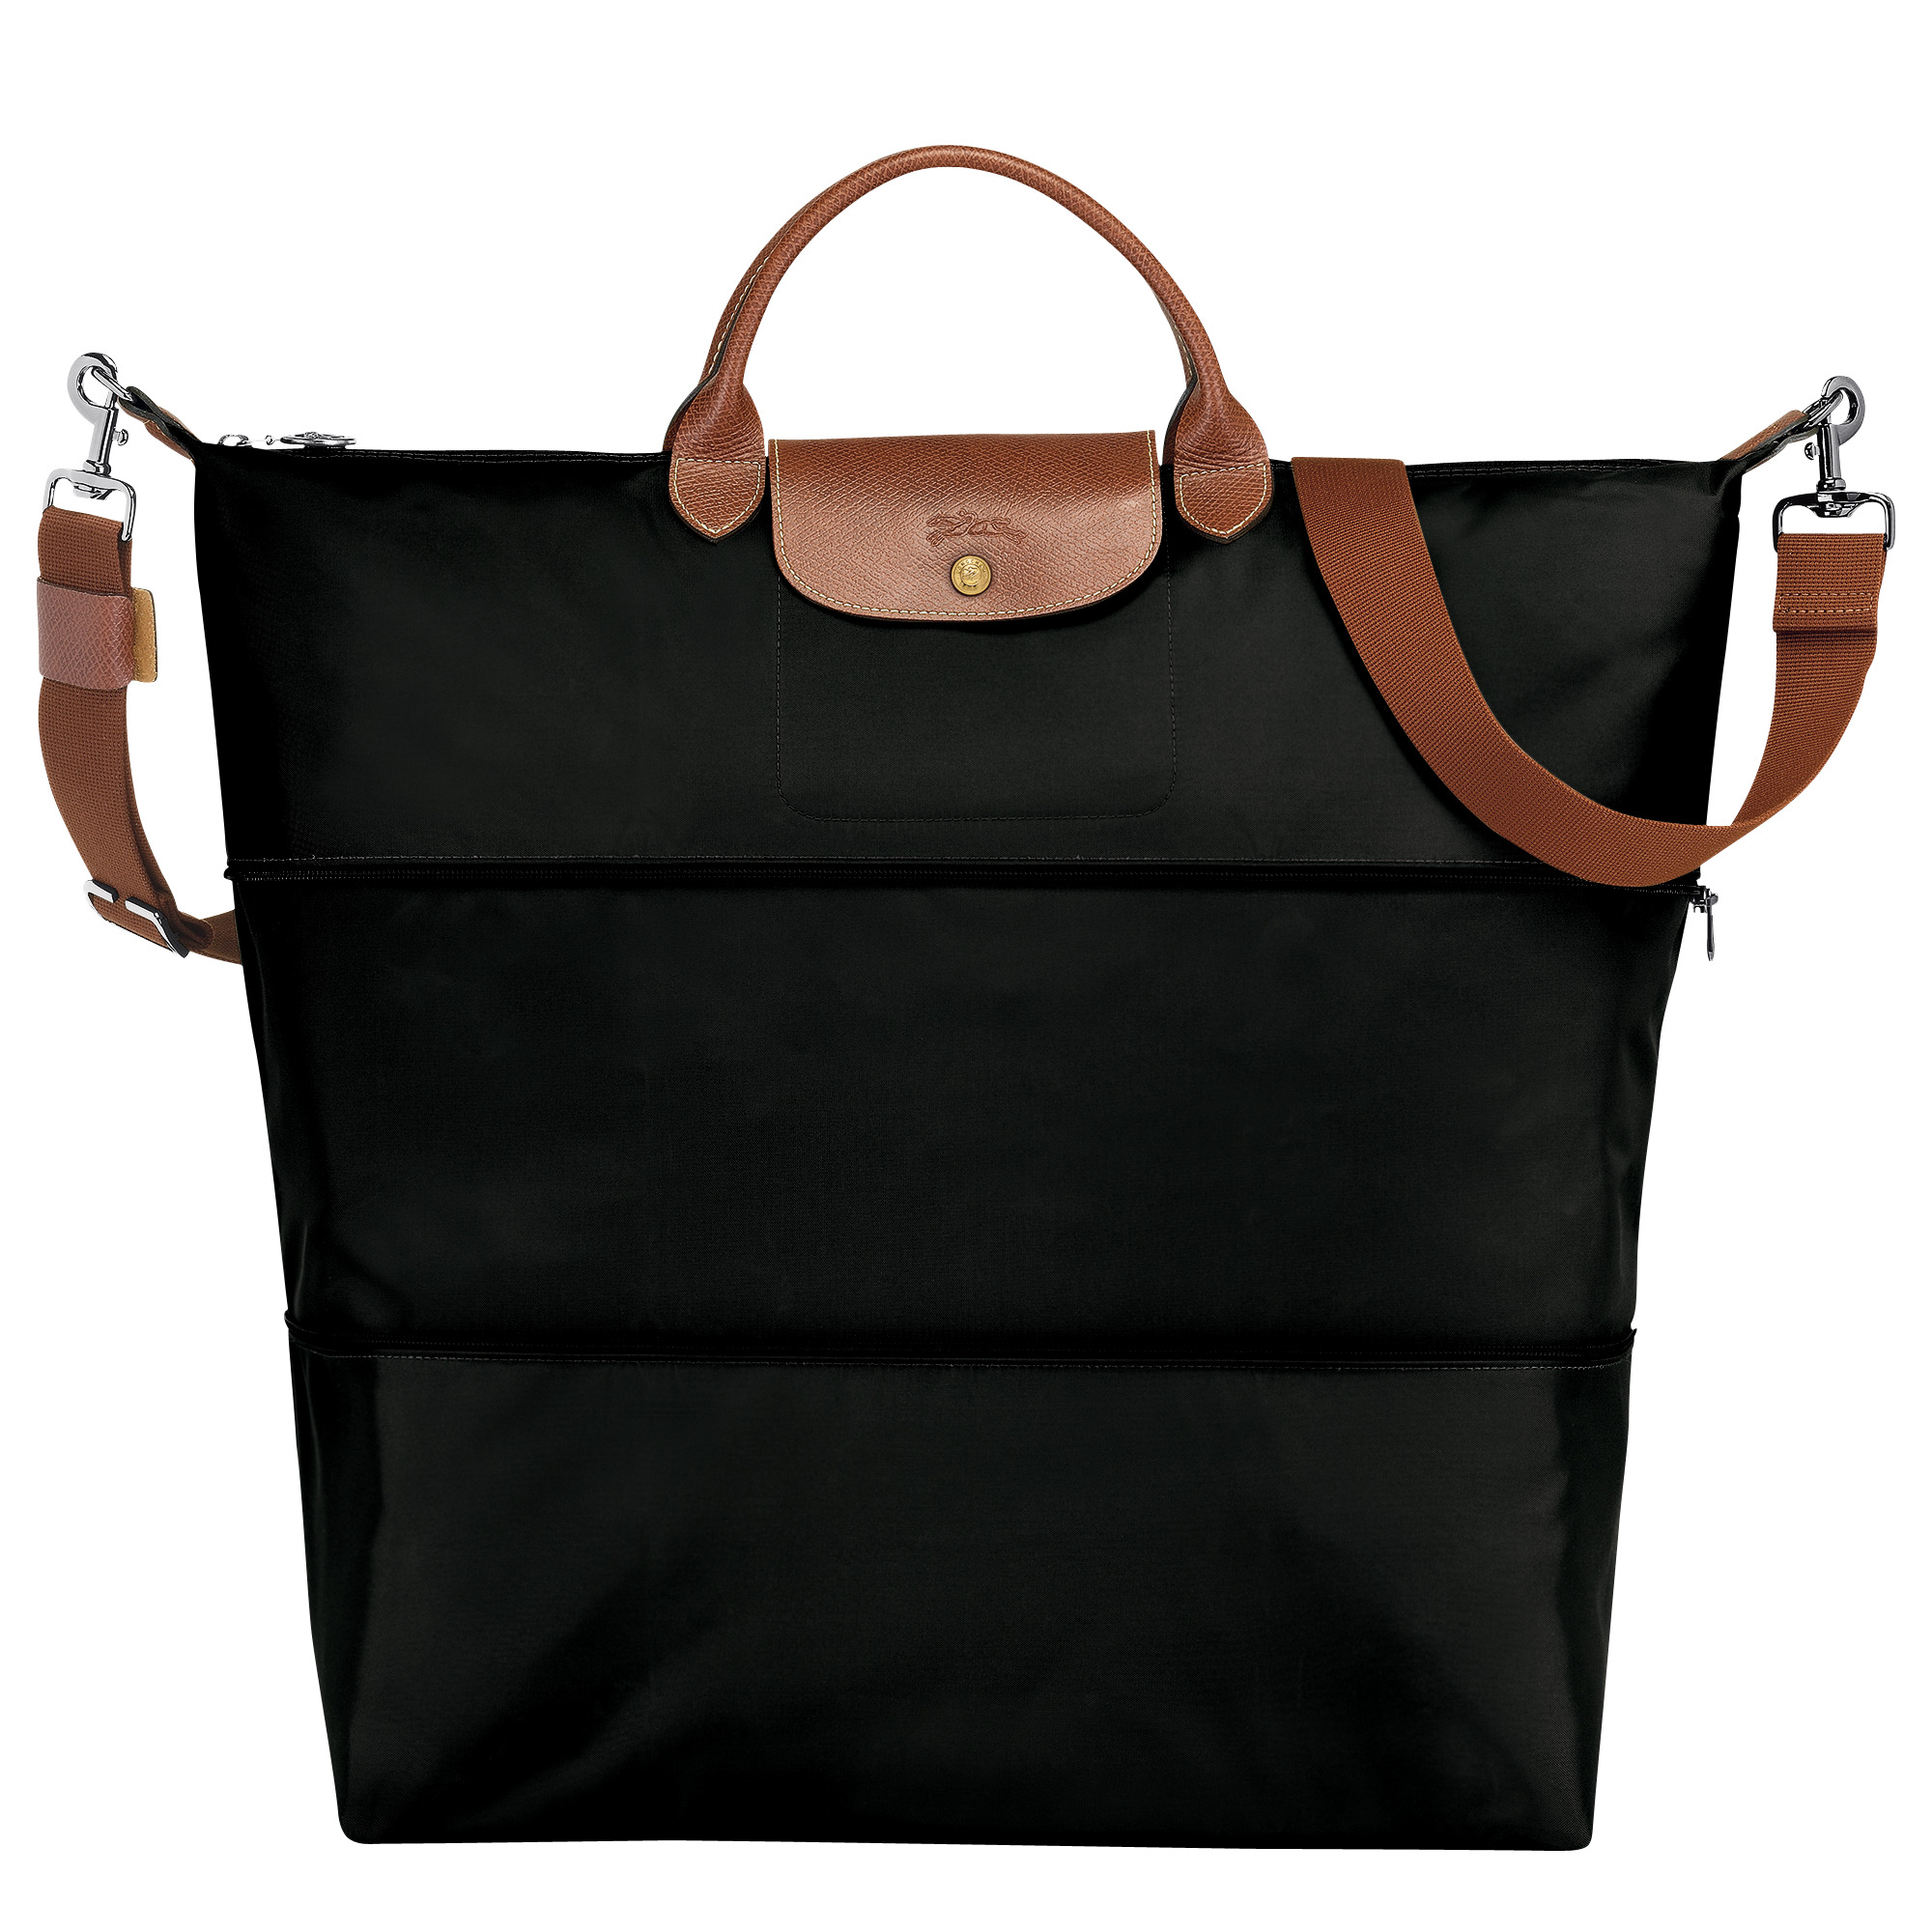 Le Pliage Original Travel bag expandable Black - Recycled canvas - 1